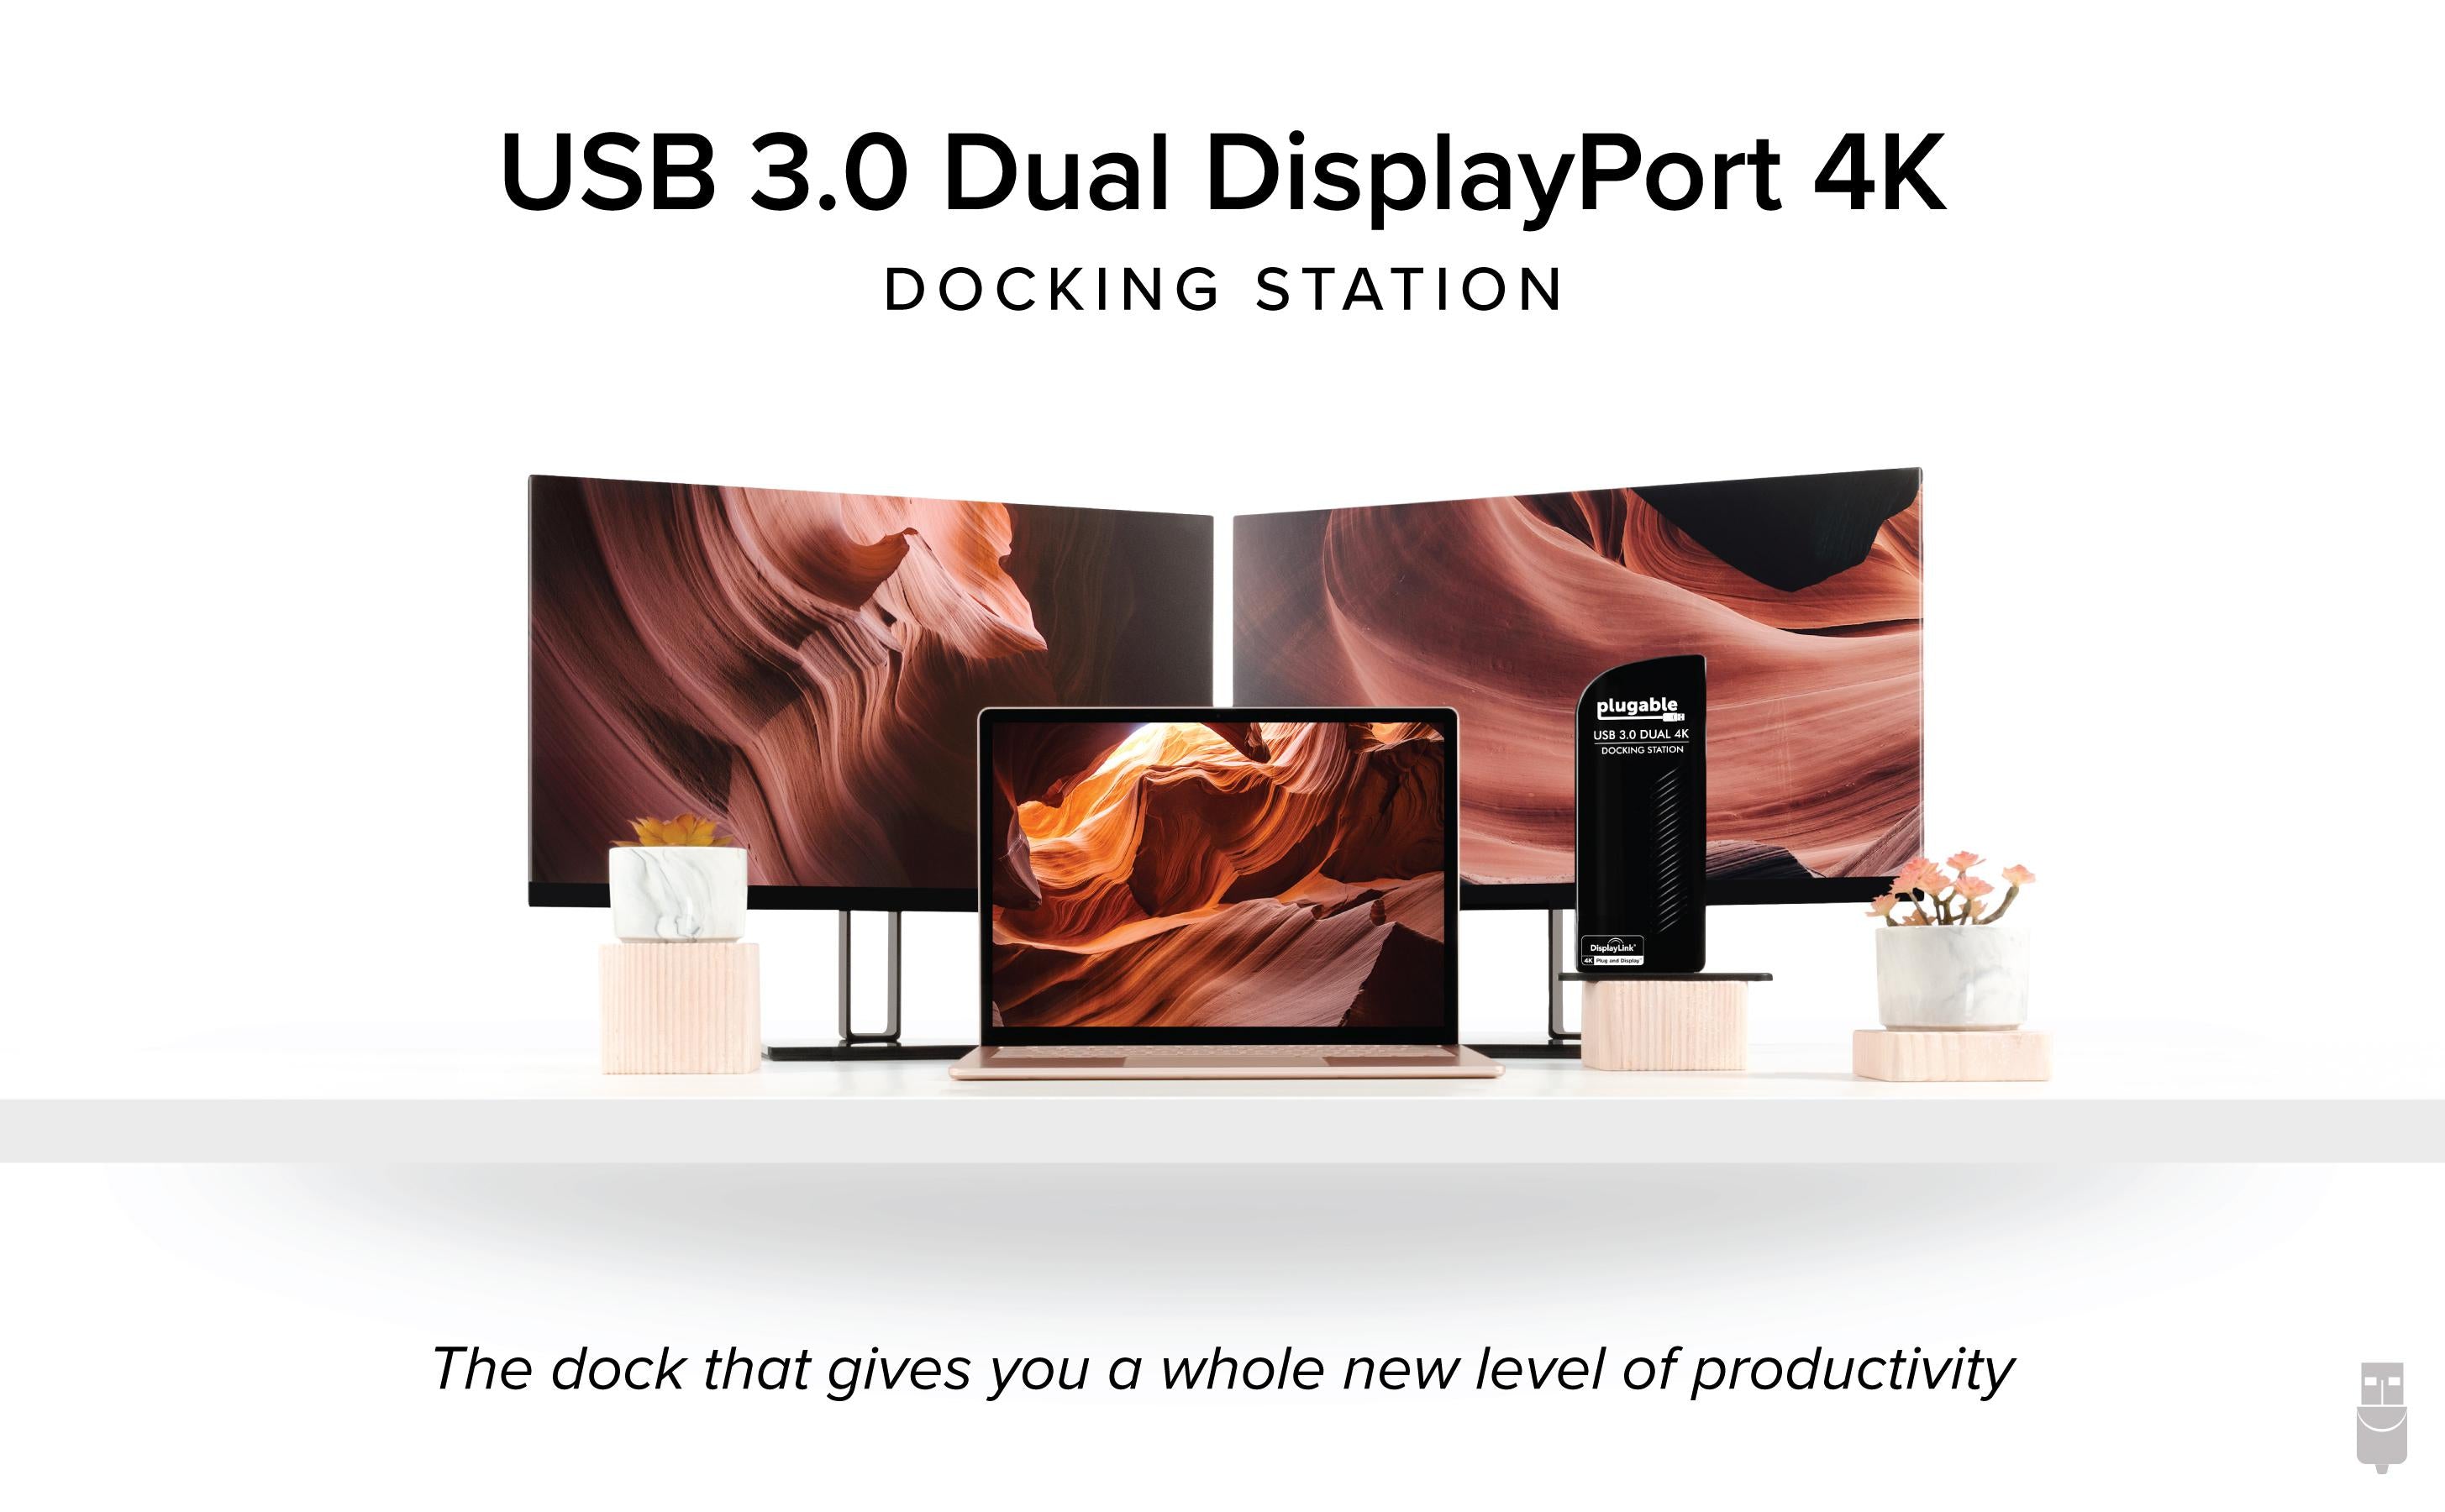 USB 3.0 Dual DisplayPort 4K Docking Station